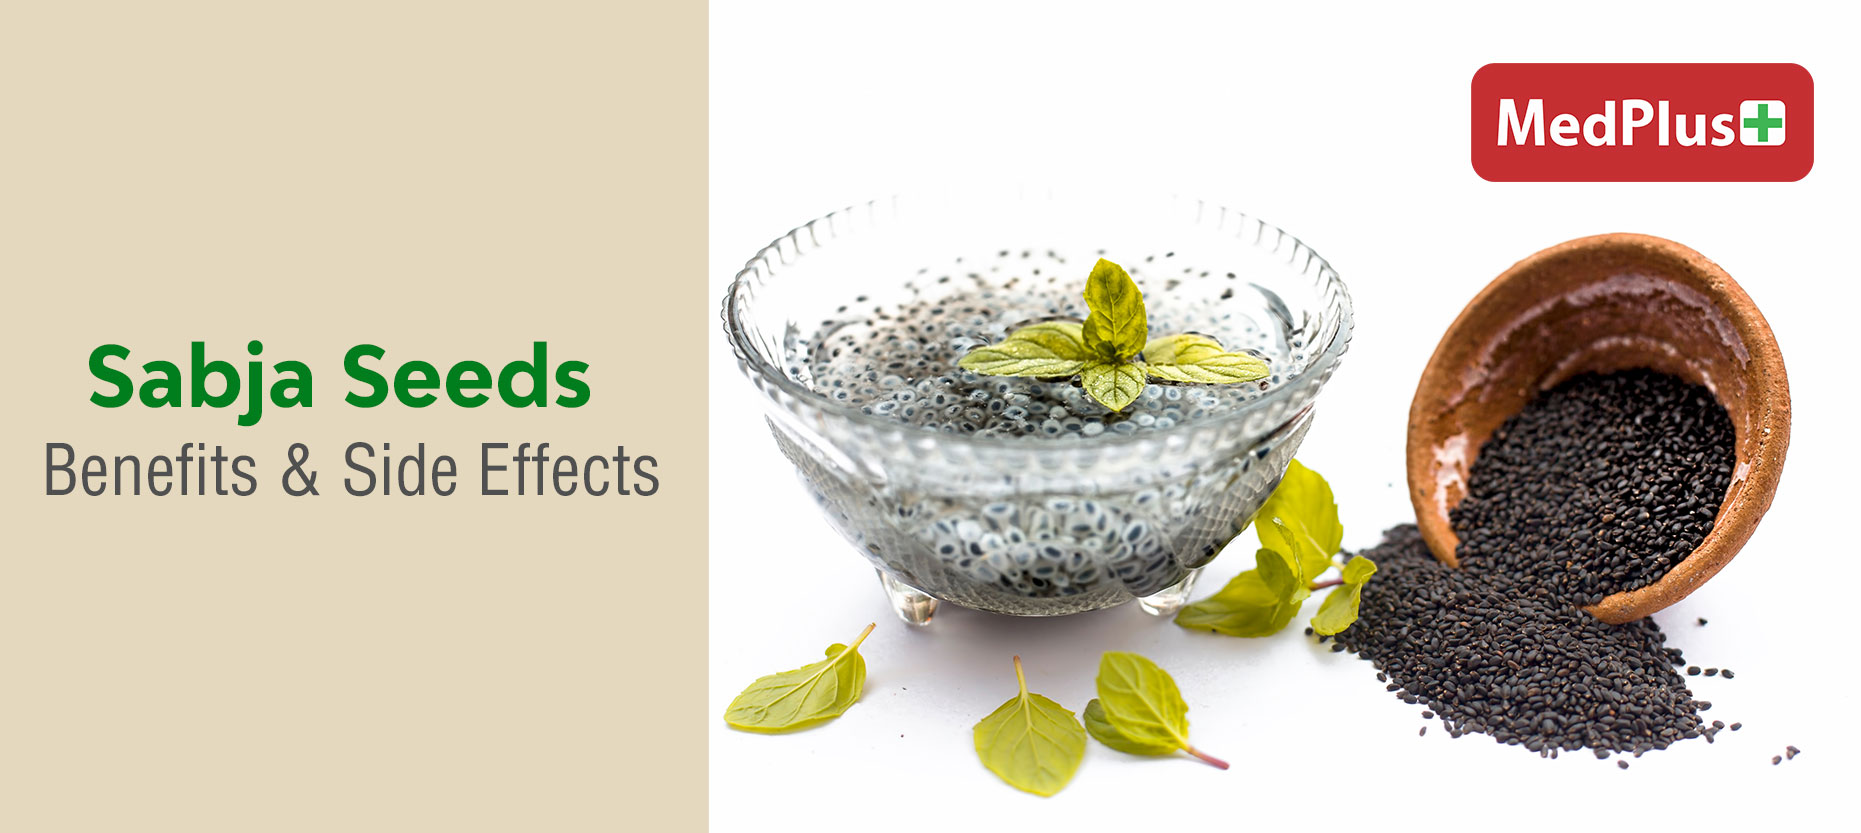 Sabja Seeds: Benefits & Side Effects